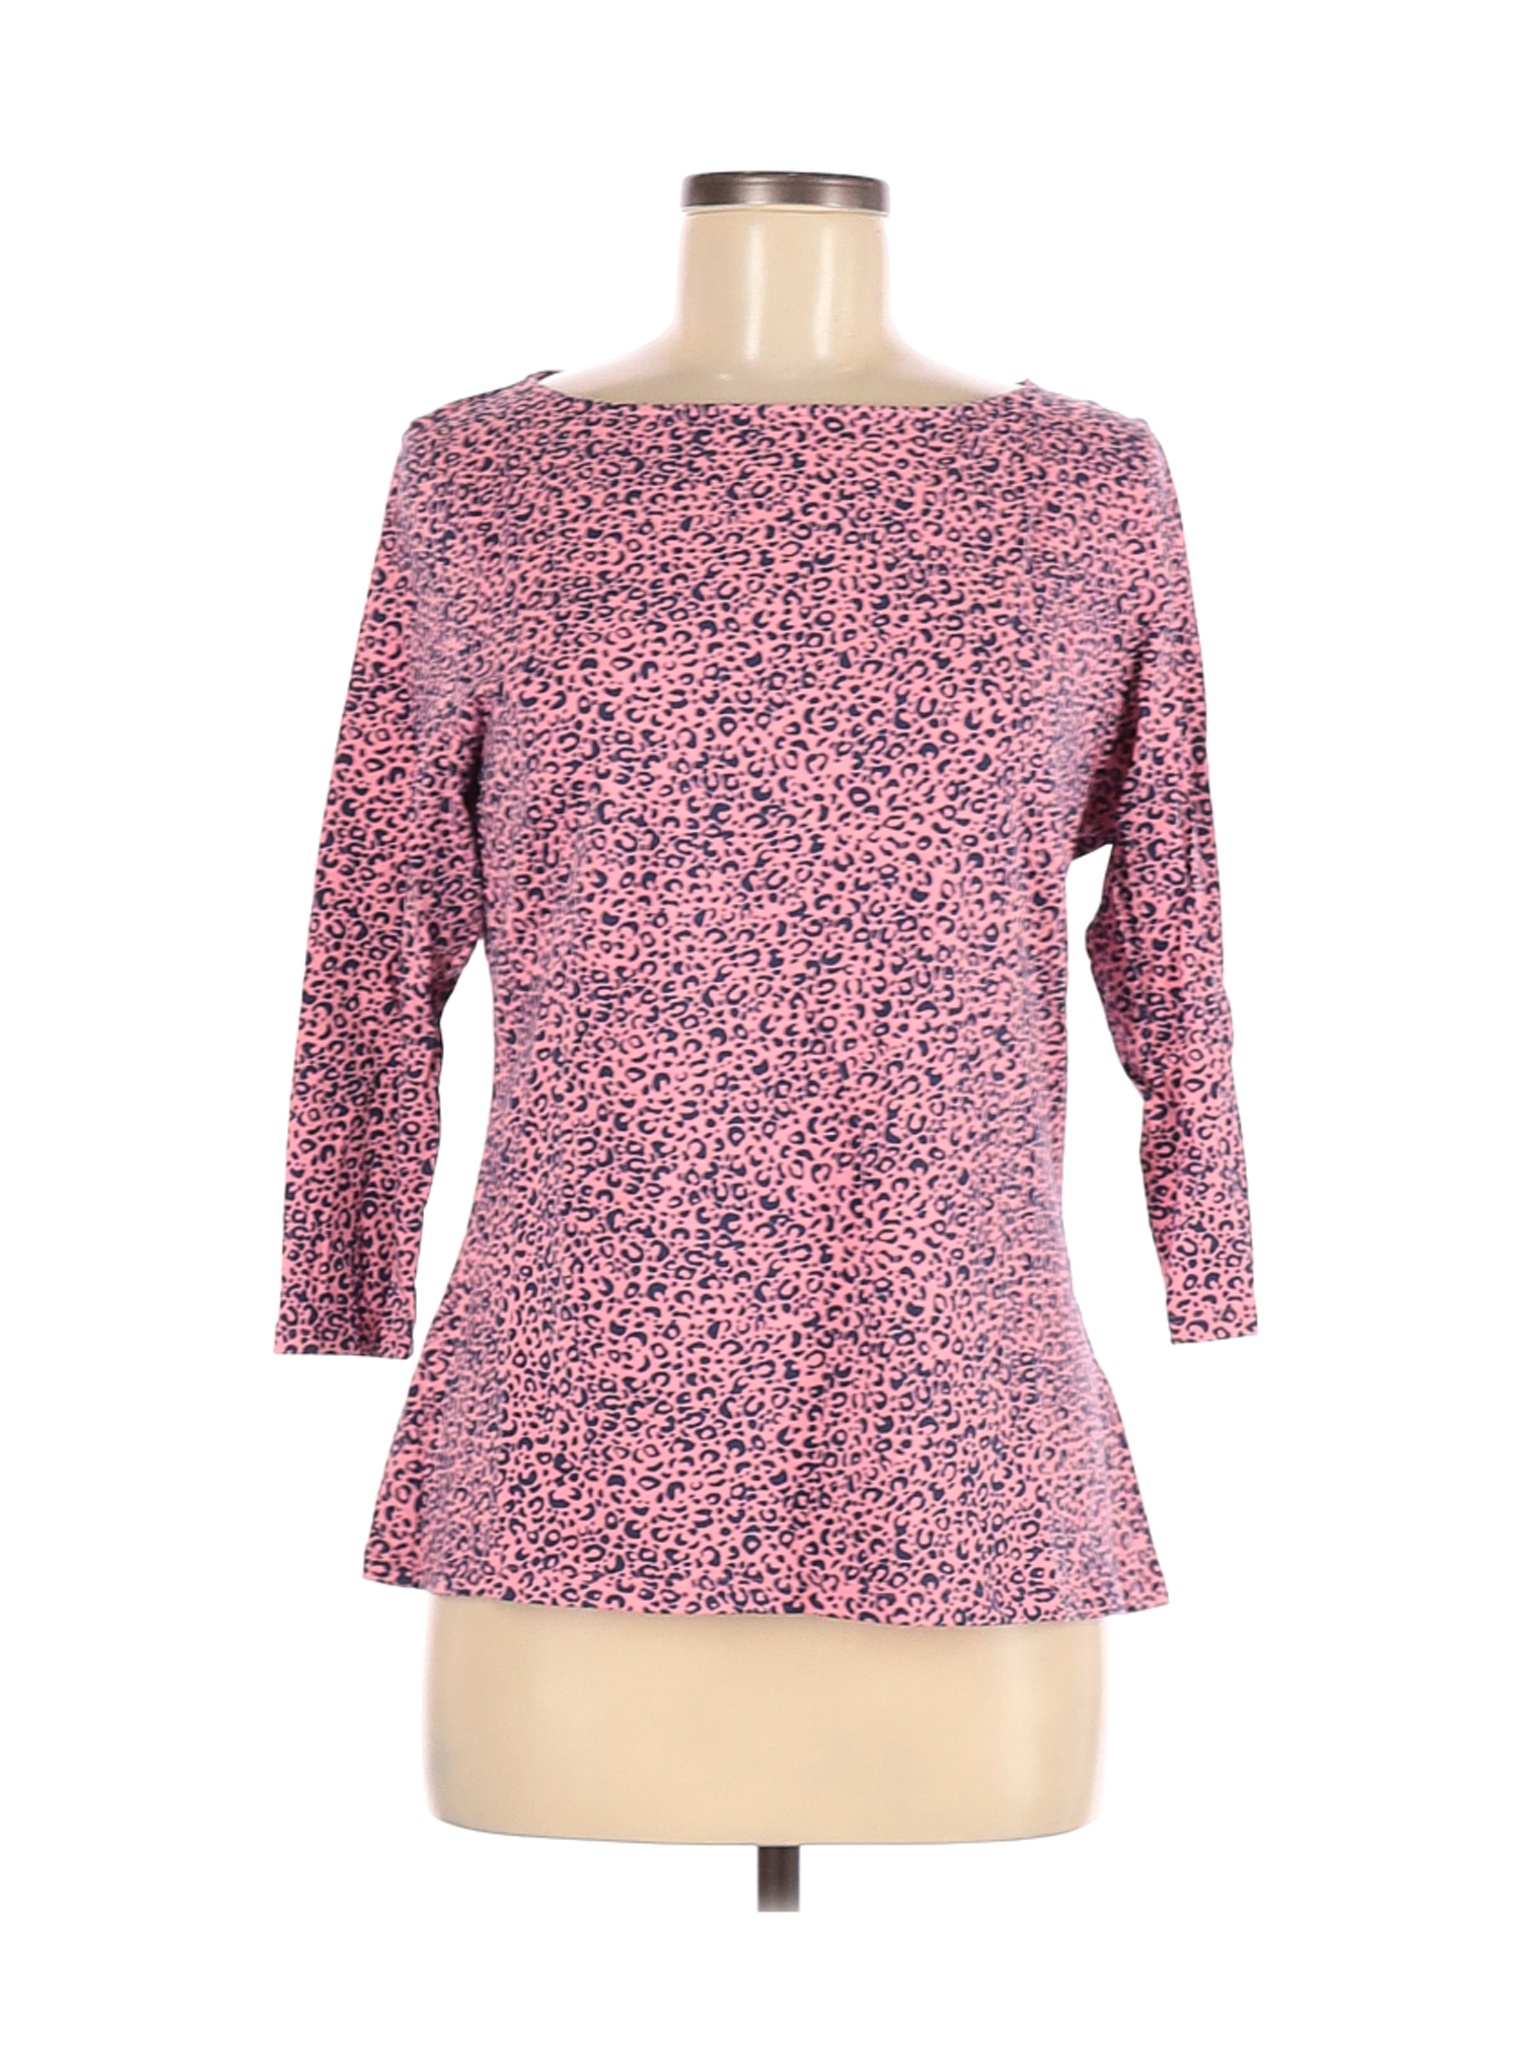 M&S Collection Women Pink 3/4 Sleeve T-Shirt 6 | eBay